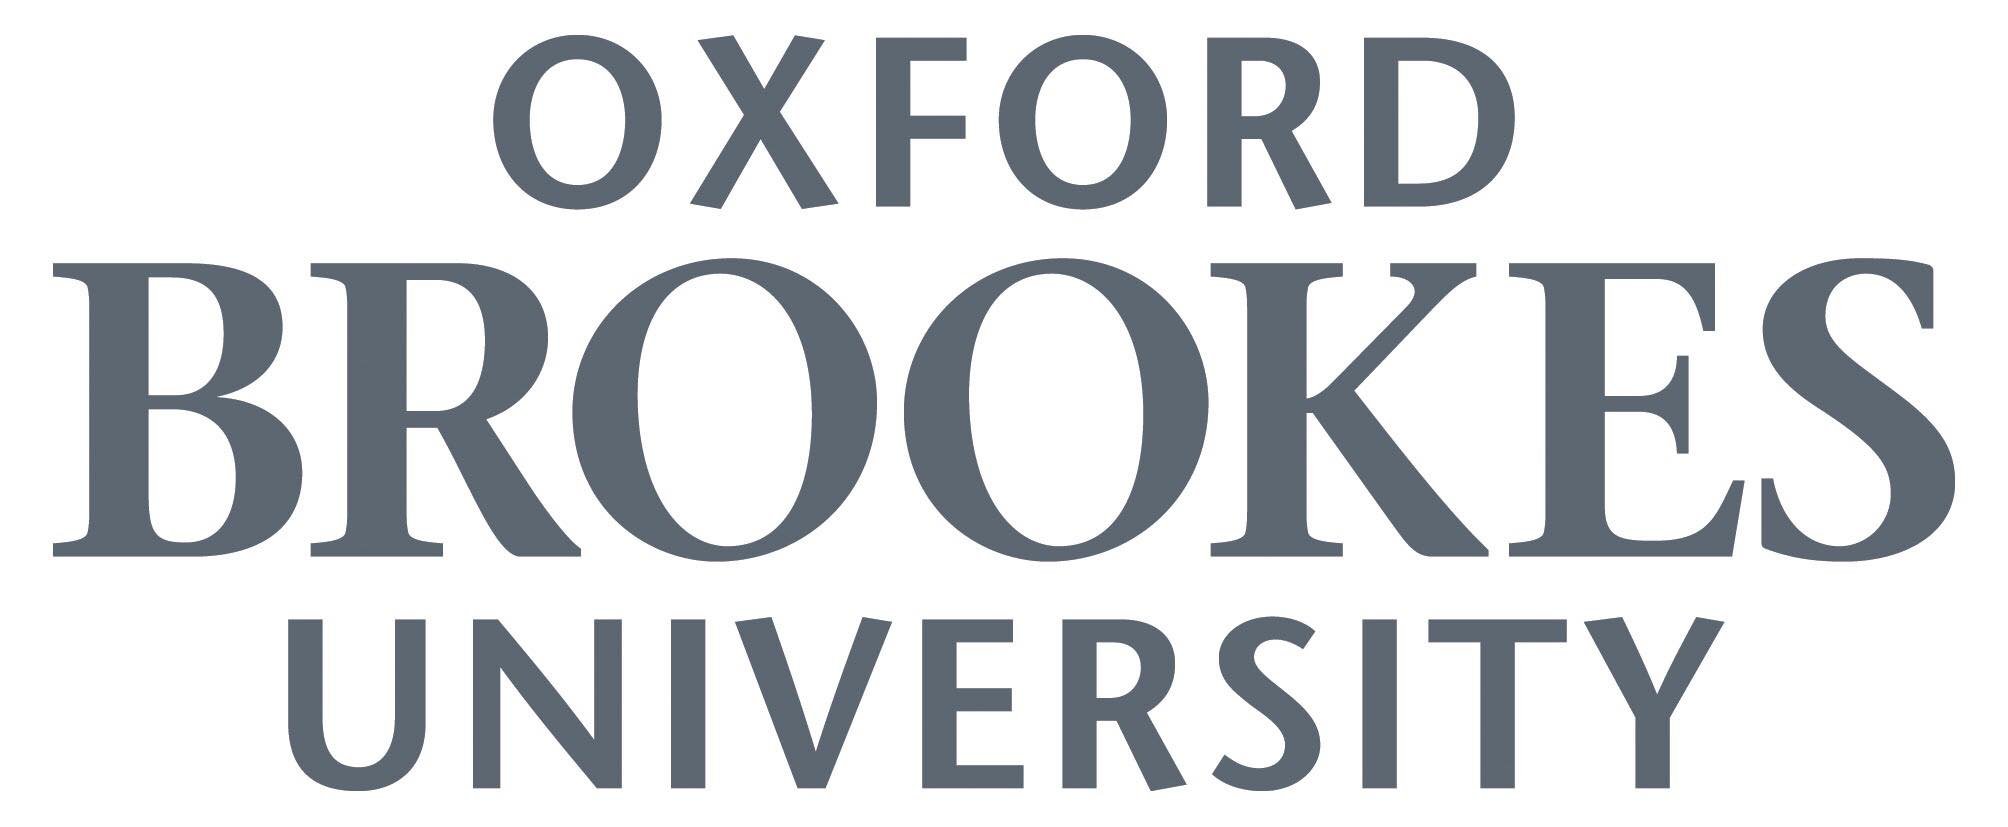 Oxford Brooks .jpg